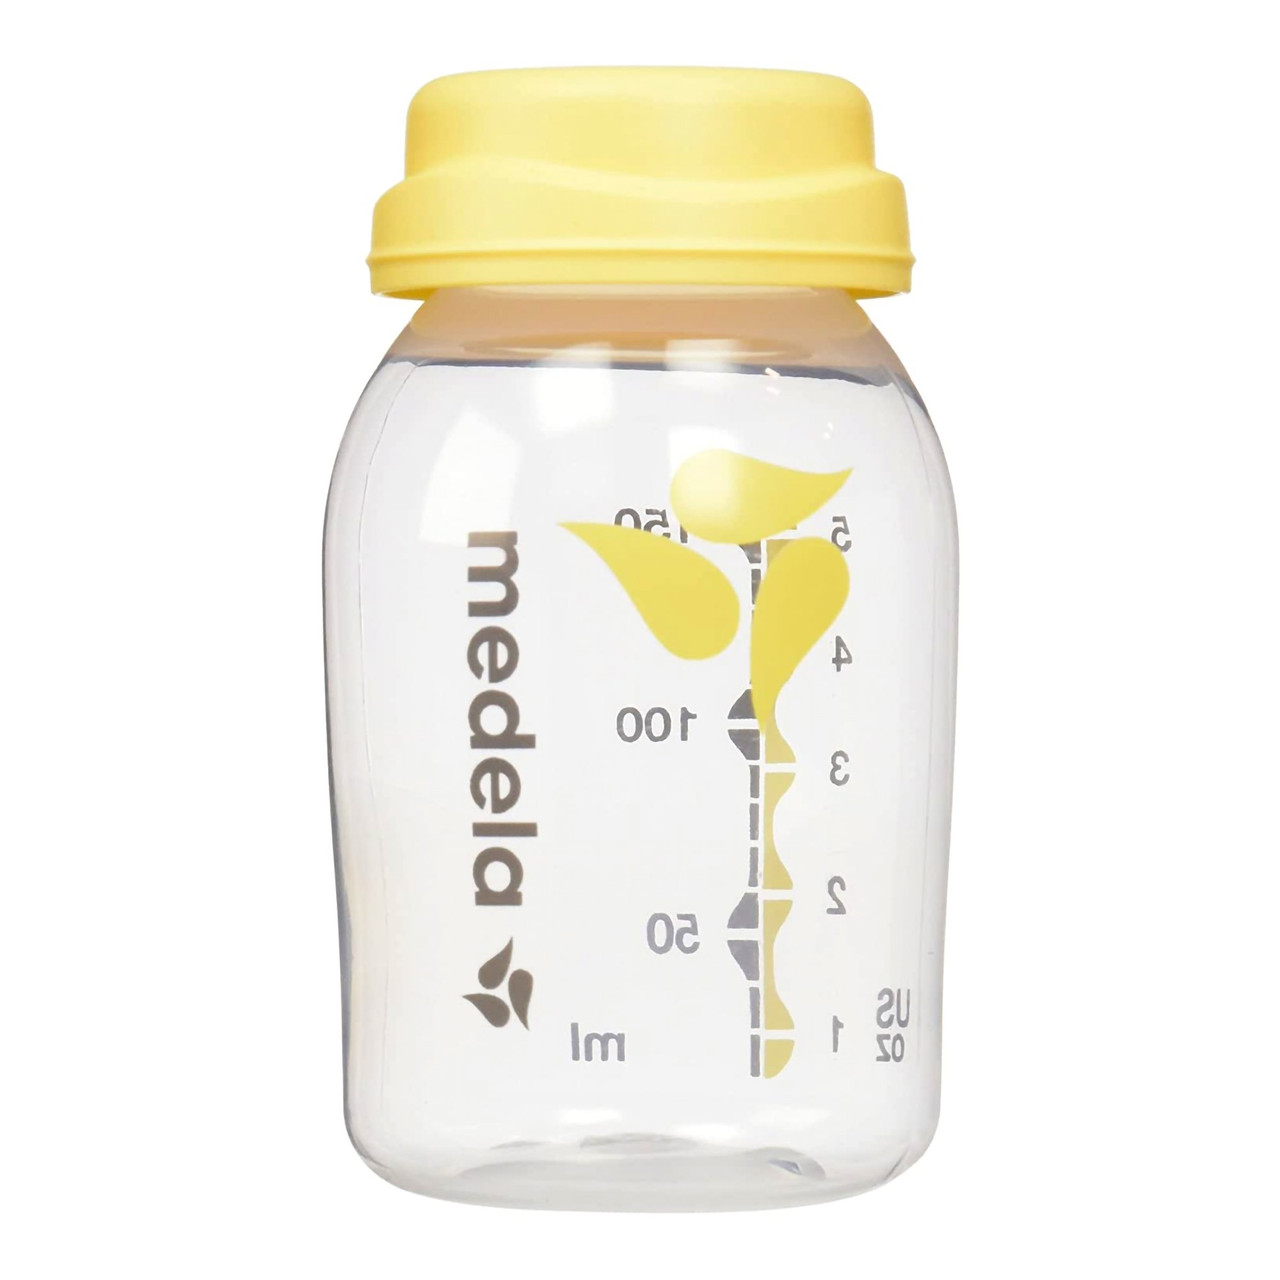 Spectra Baby Bottles, 5 oz - 2 ct